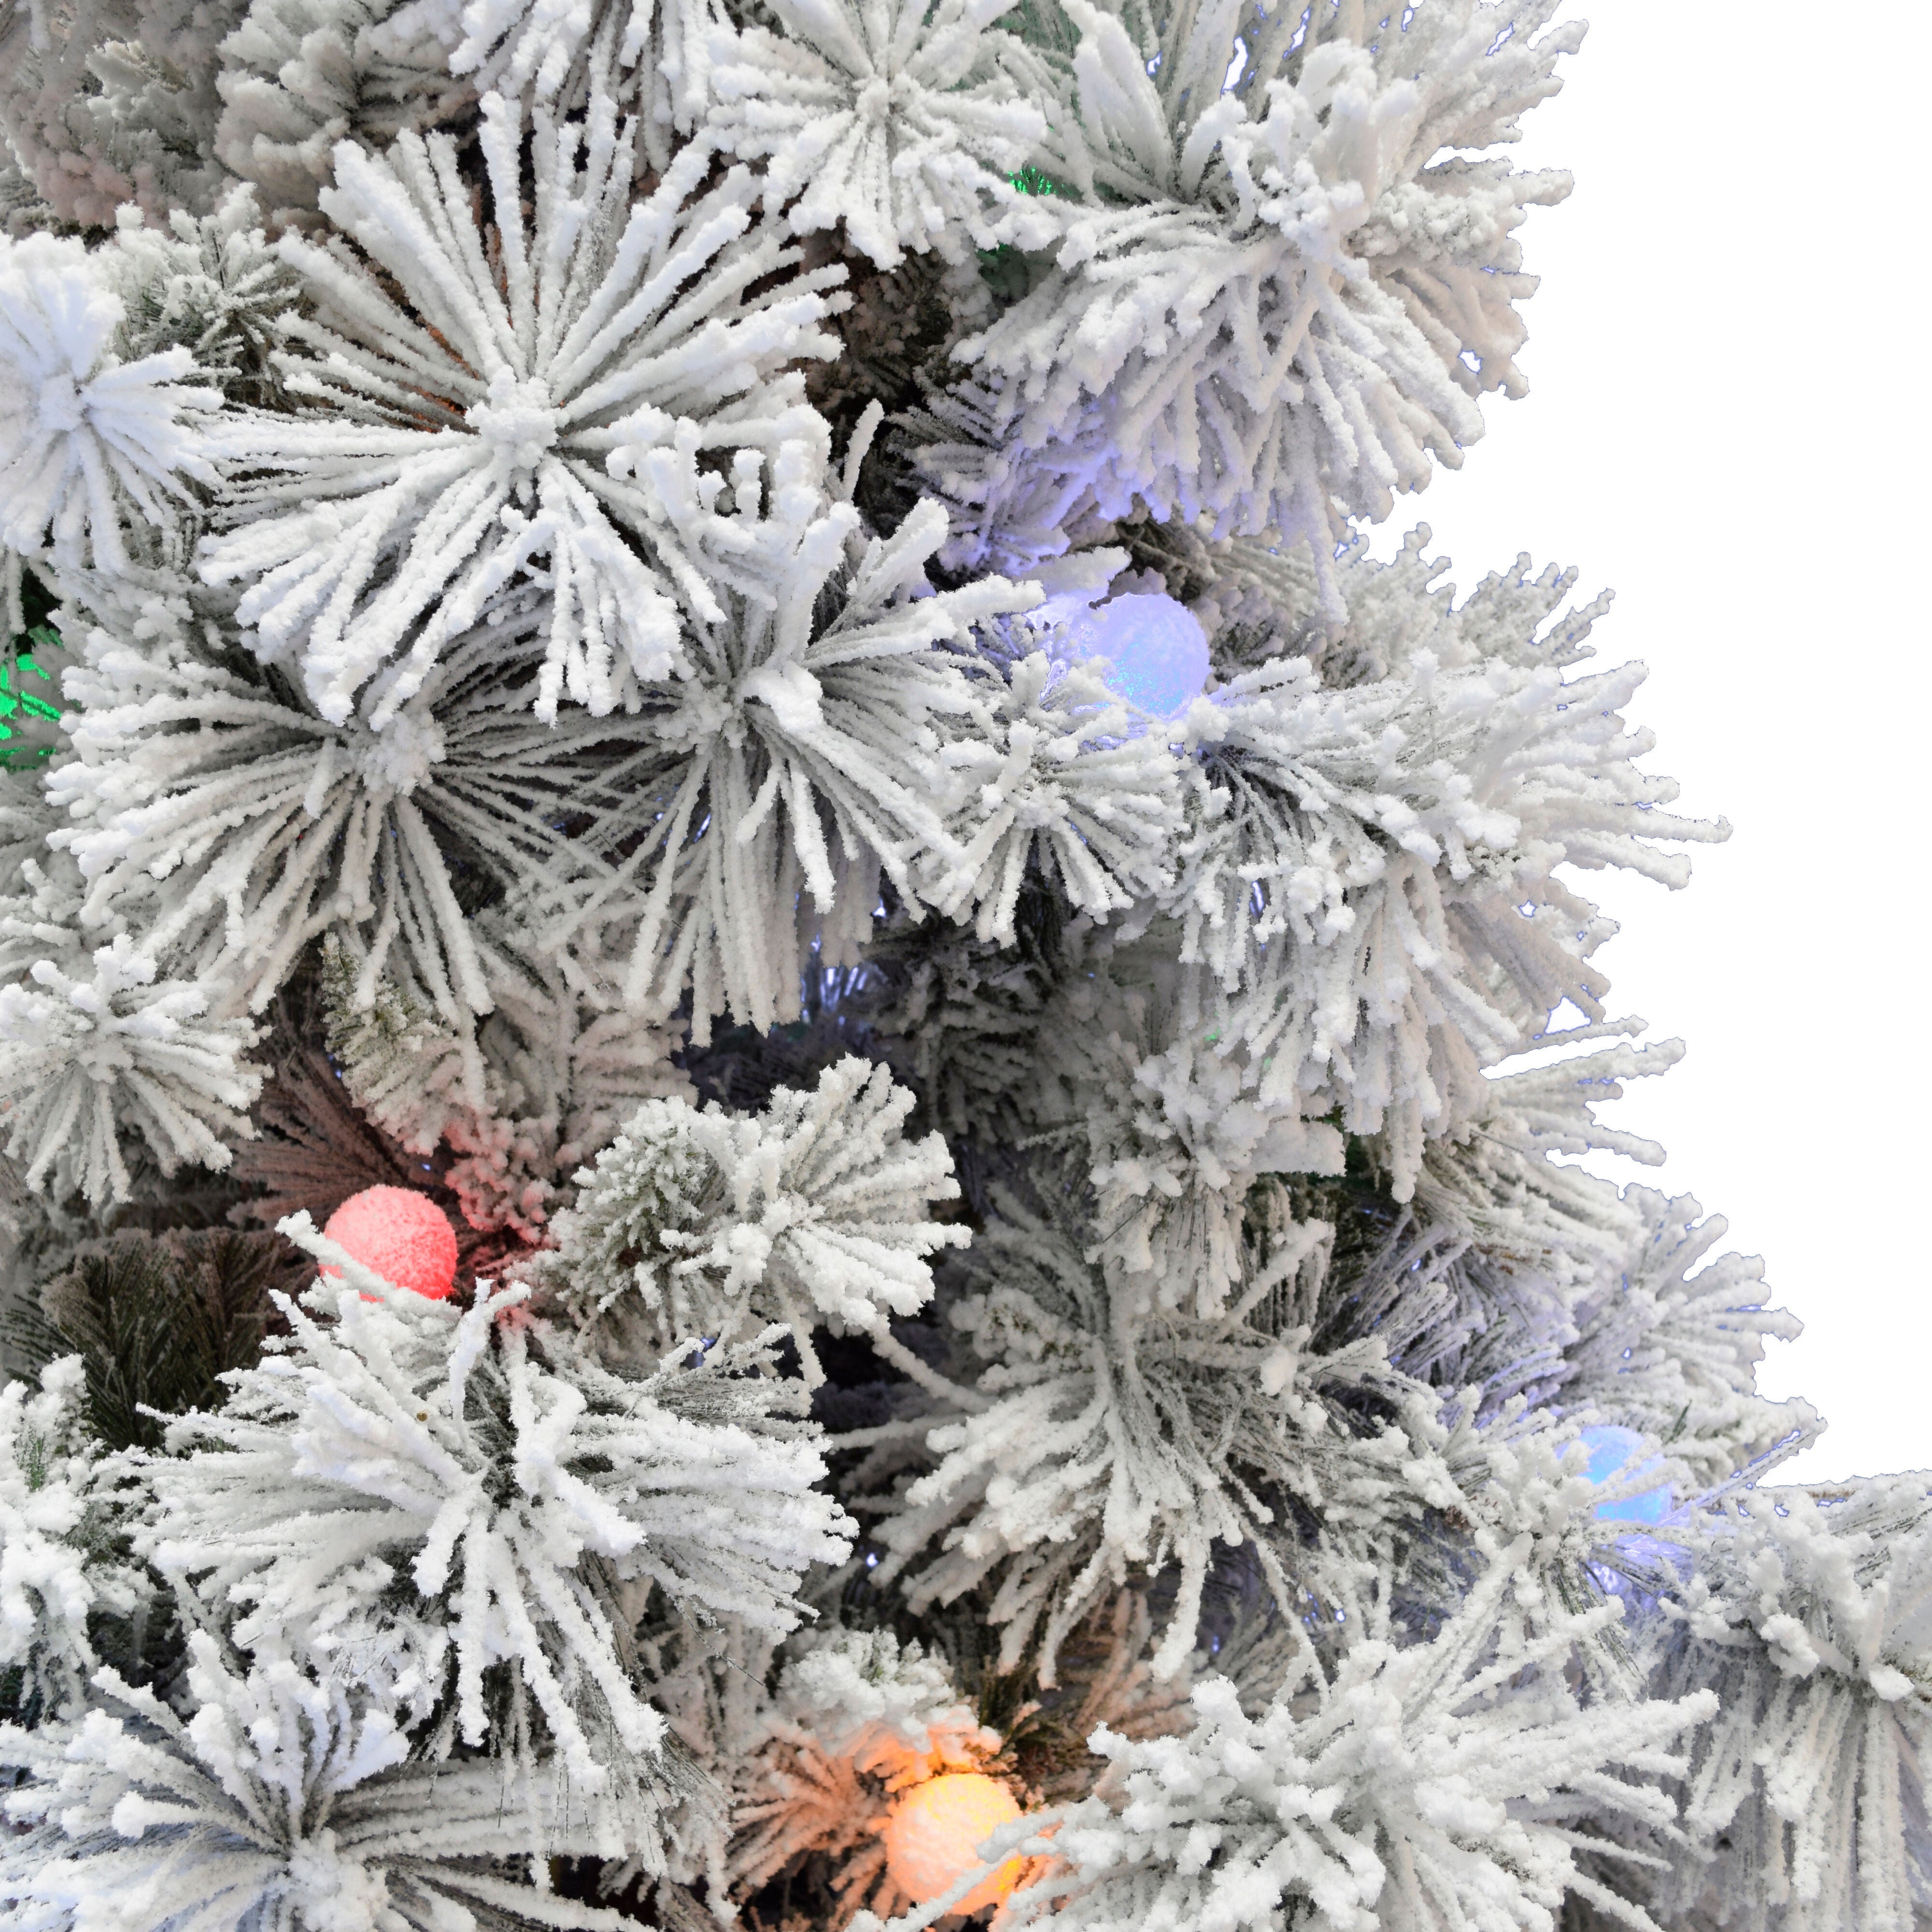 Fraser Hill Farm -  6.5-Ft. Flocked Snowy Pine Christmas Tree with Colorful G40 LED Light Bulbs